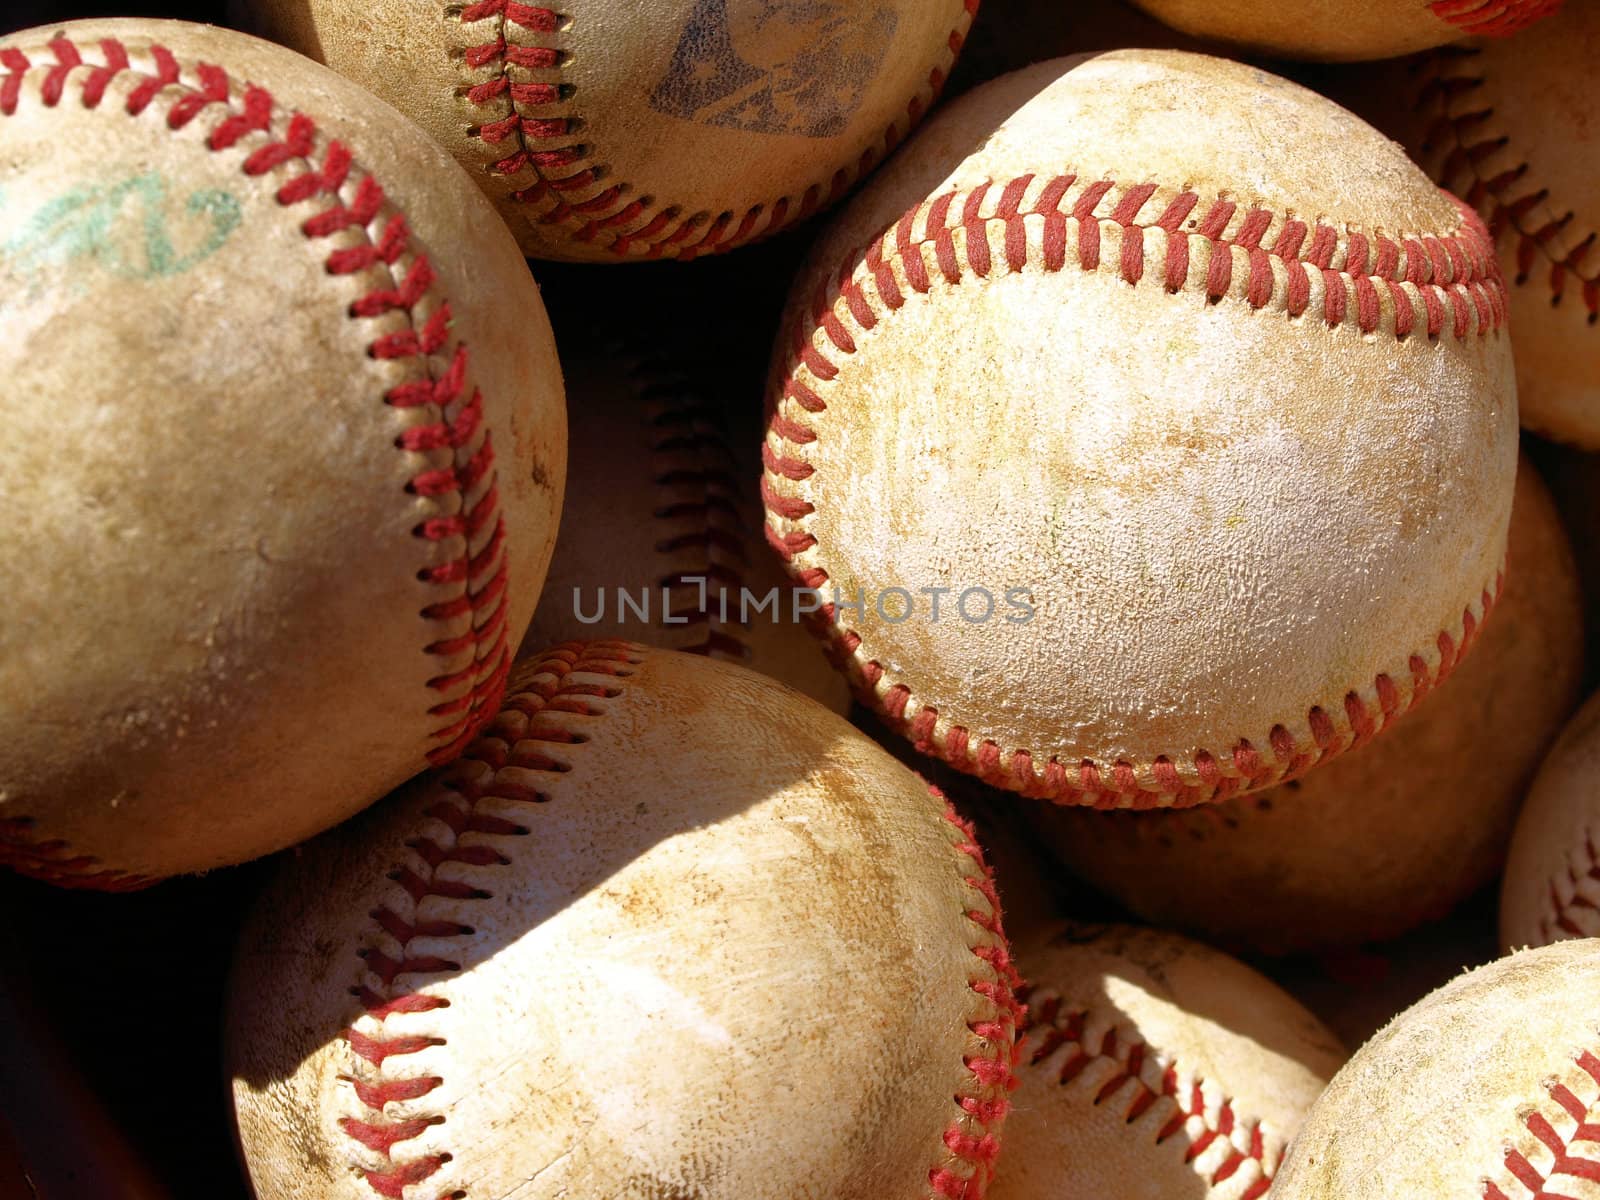 Old baseballs in a bucket after long season